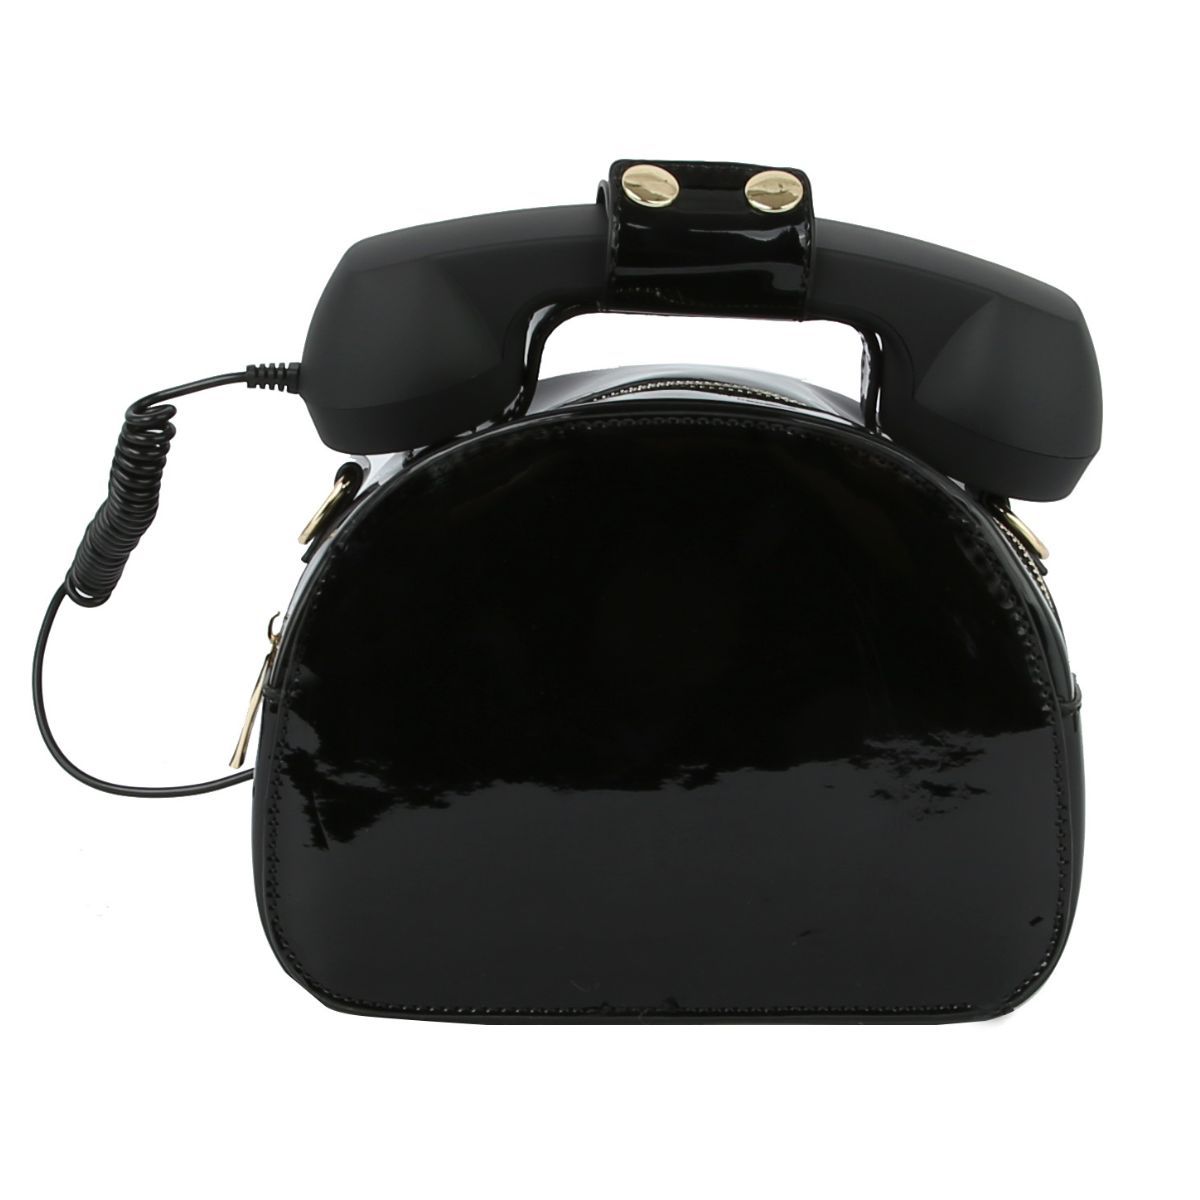 Black Rotary Phone AUX Bag